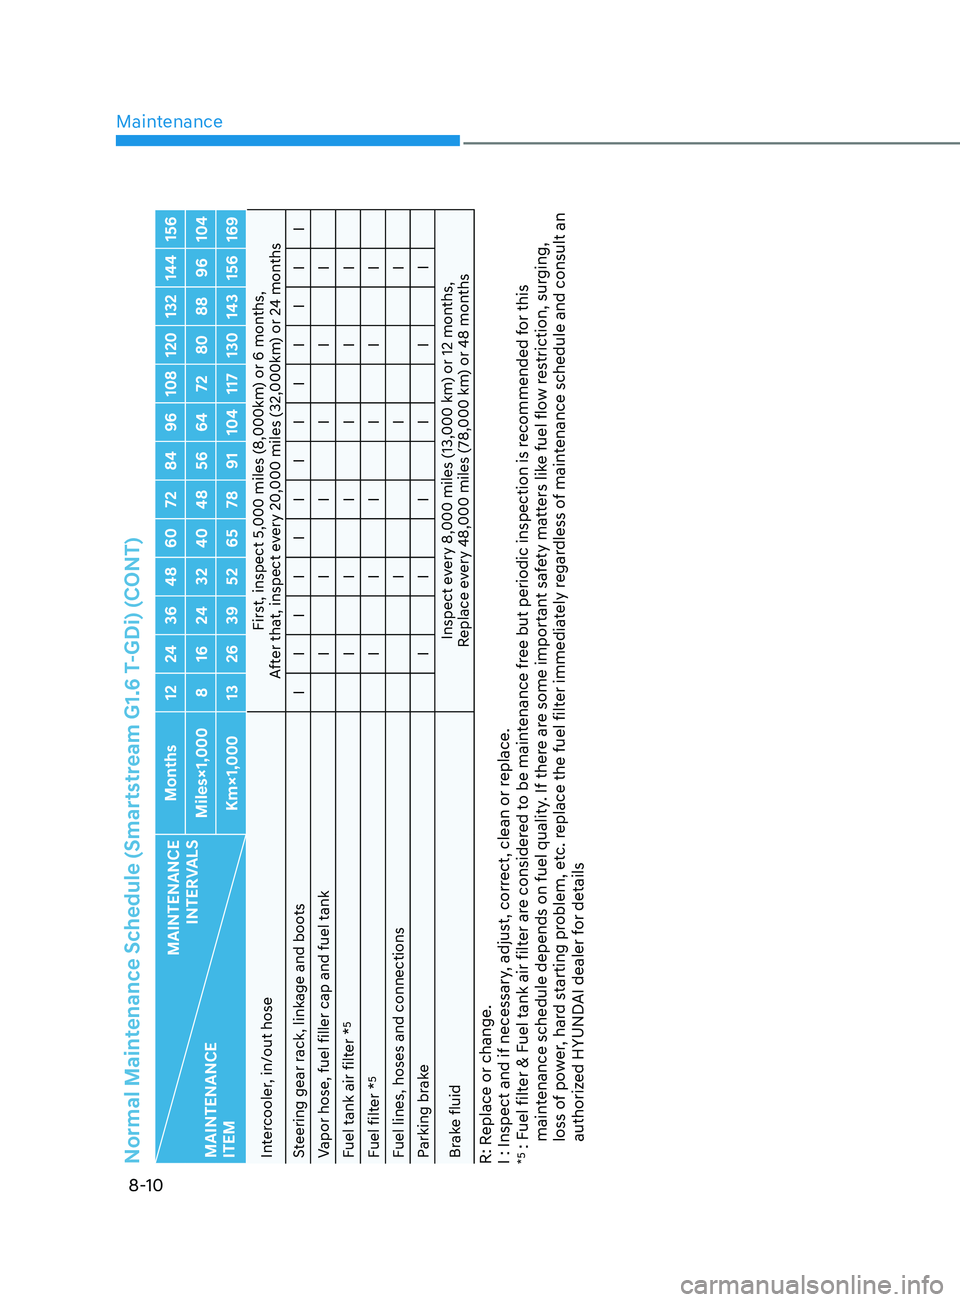 HYUNDAI SONATA 2022  Owners Manual Maintenance
8-10
Normal Maintenance Schedule (Smartstream G1.6 T-GDi) (CONT)
MAINTENANCE  INTERVALS
MAINTENANCE  
ITEM Months 12 24 36 48 60 72 84 96 108 120 132 144 156
Miles×1,000 8 16 24 32 40 48 